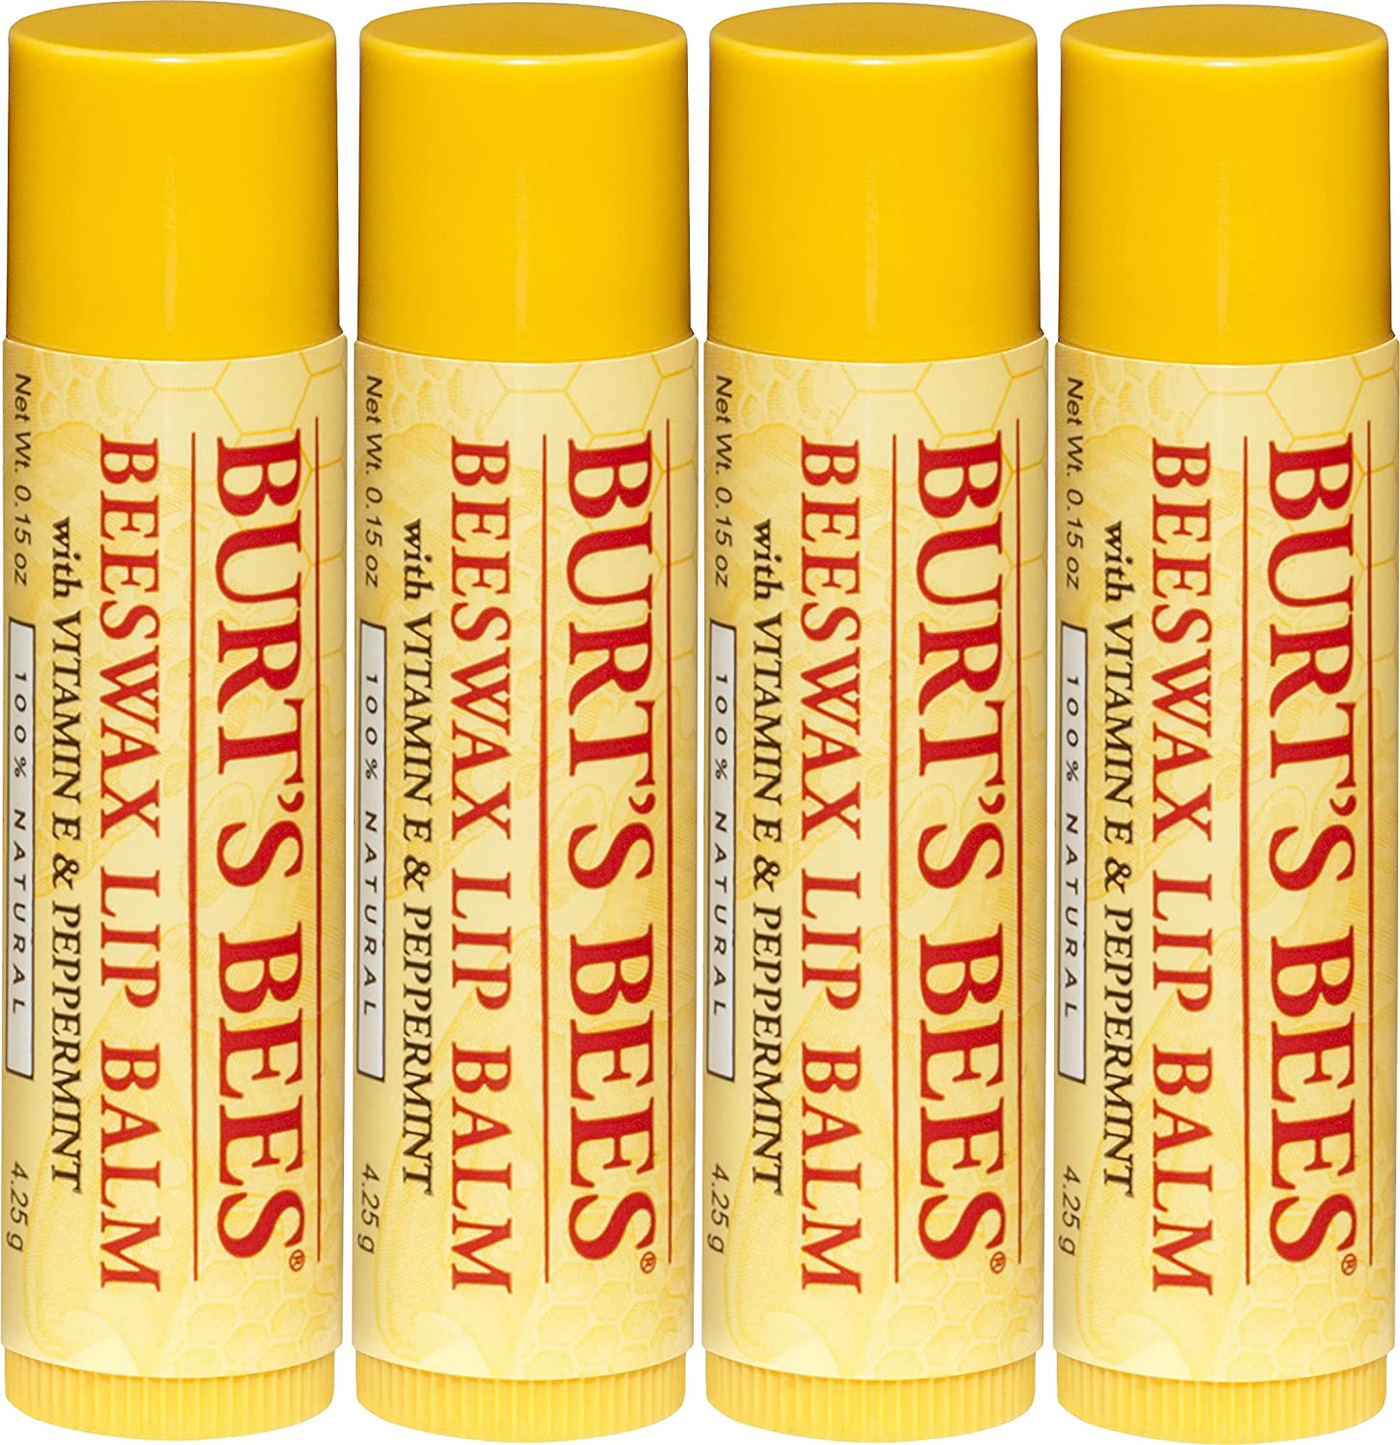 Burt's Bees 100% Natural Origin Moisturizing Lip Balm, Original Beeswax, 2 Tubes in Blister Box